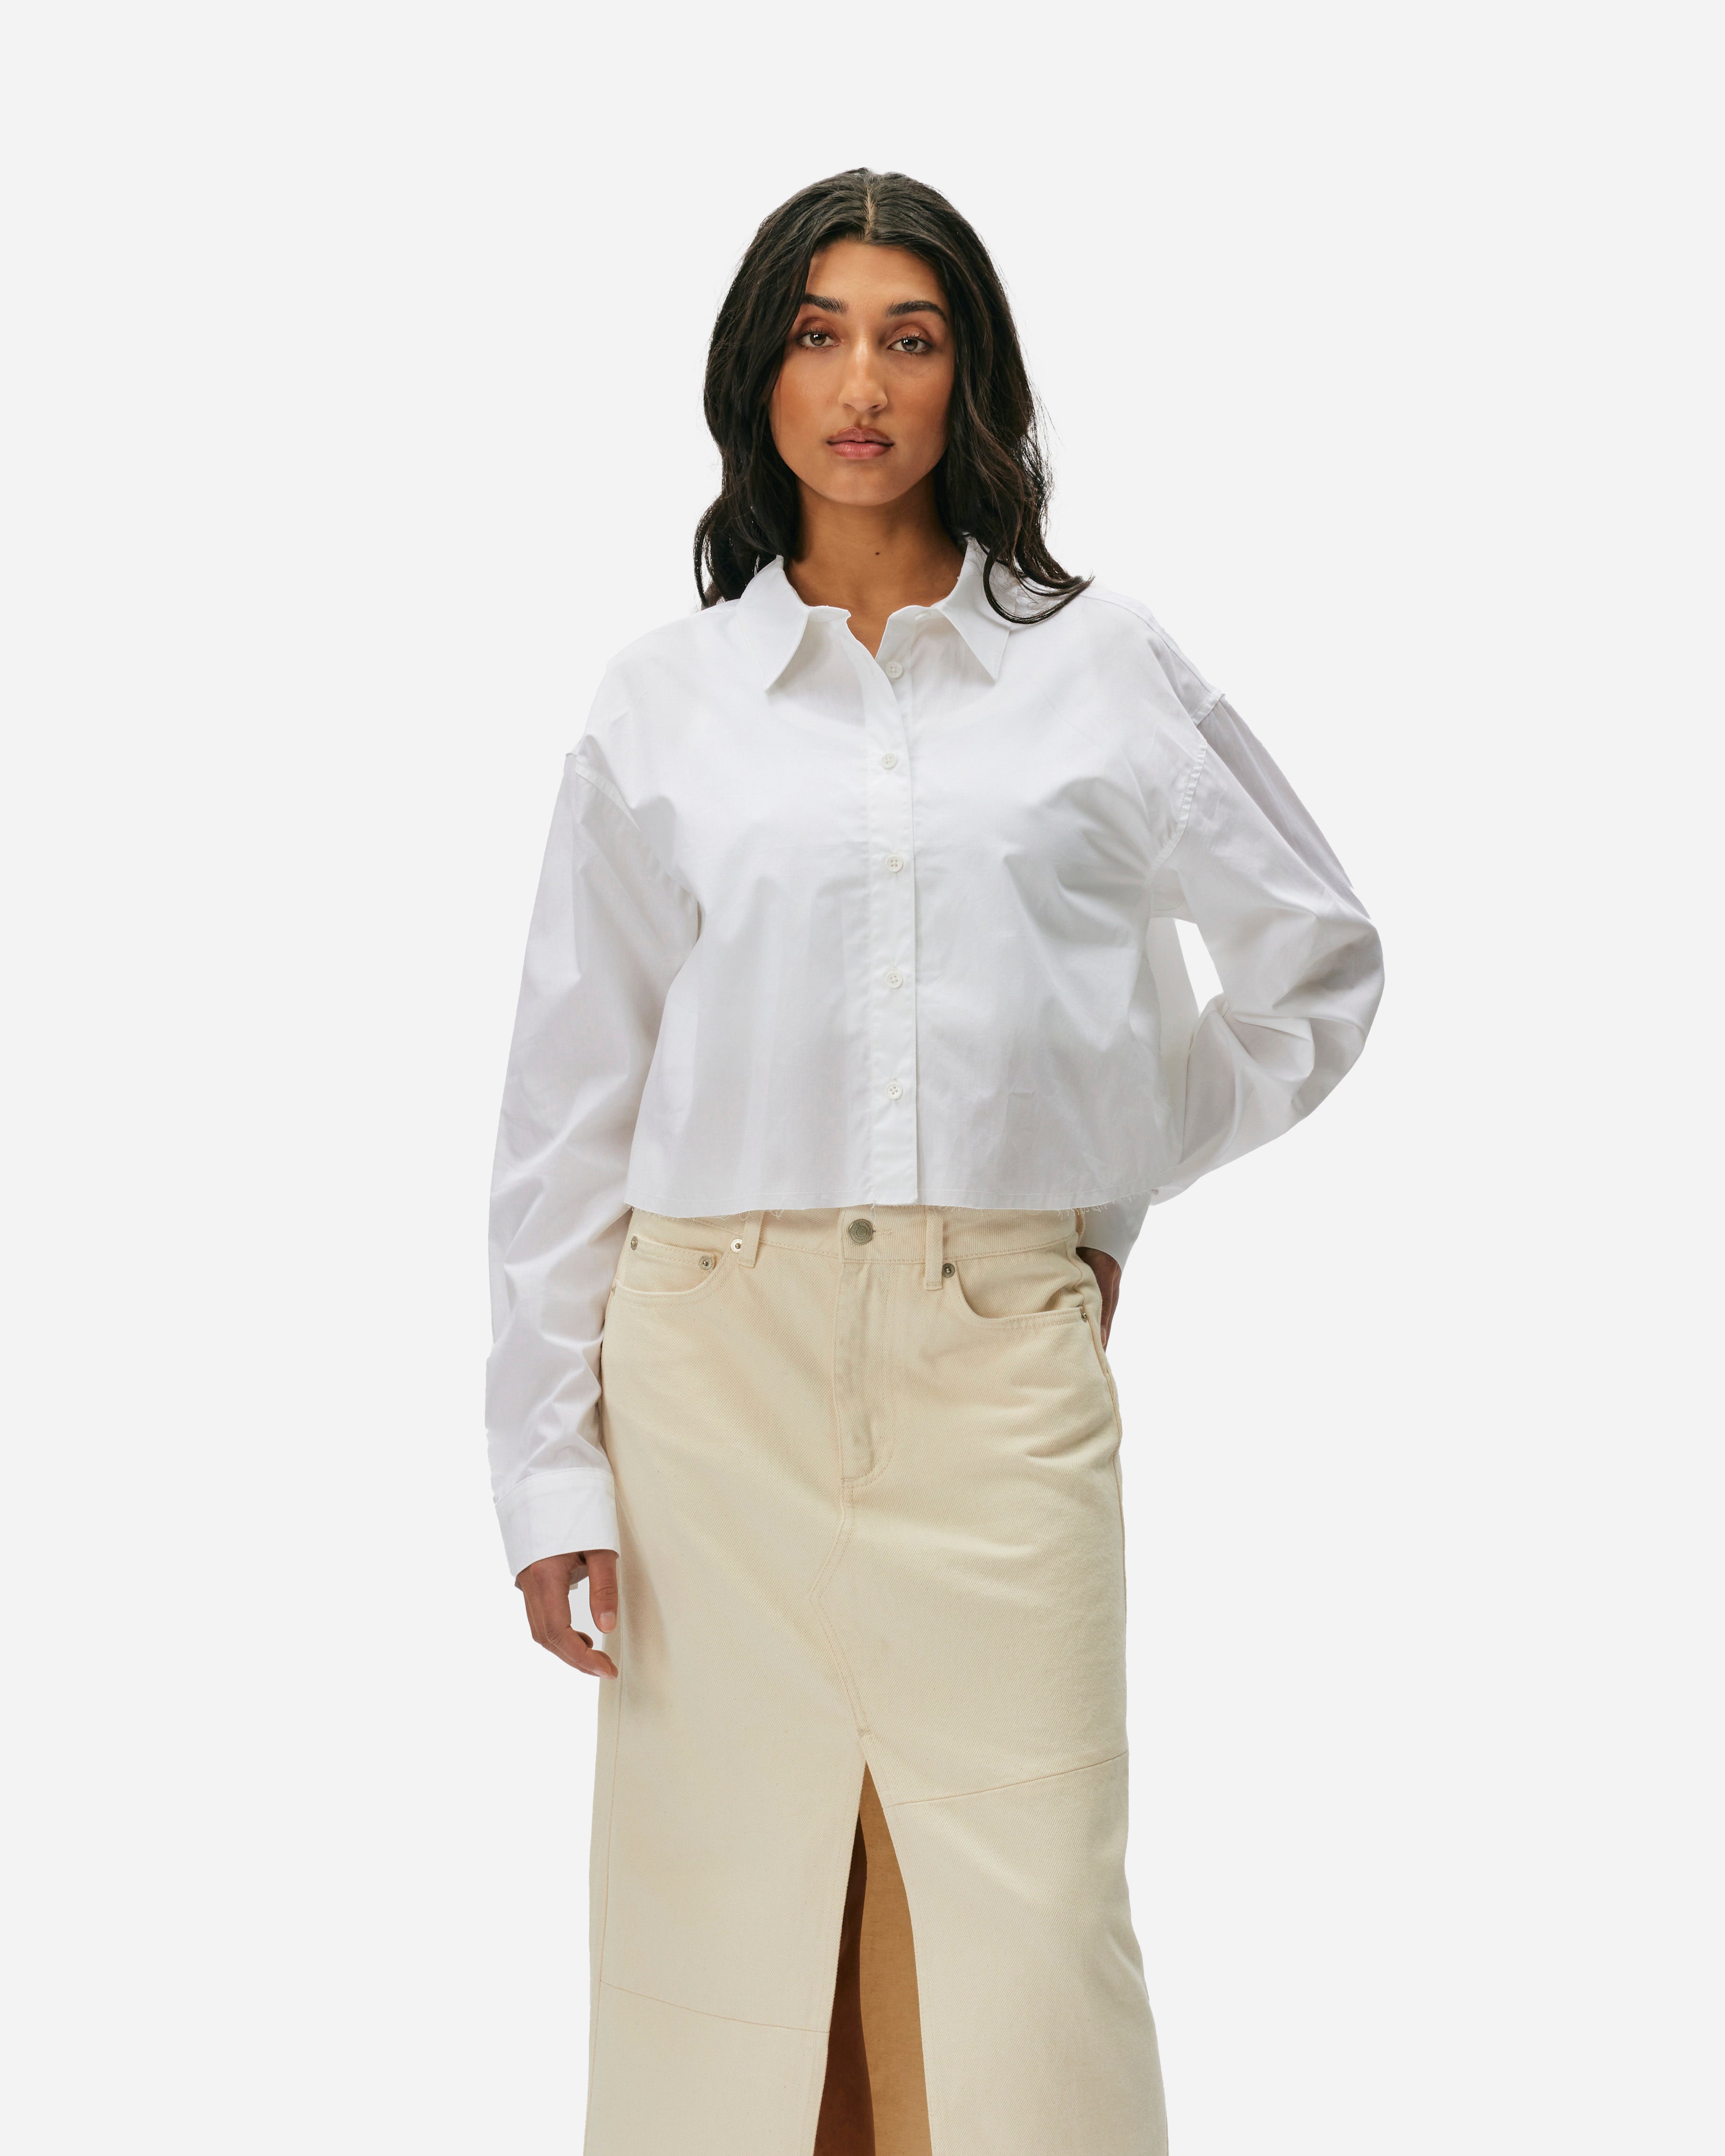 Oval Square Crisp Cropped Shirt White  20685-1001